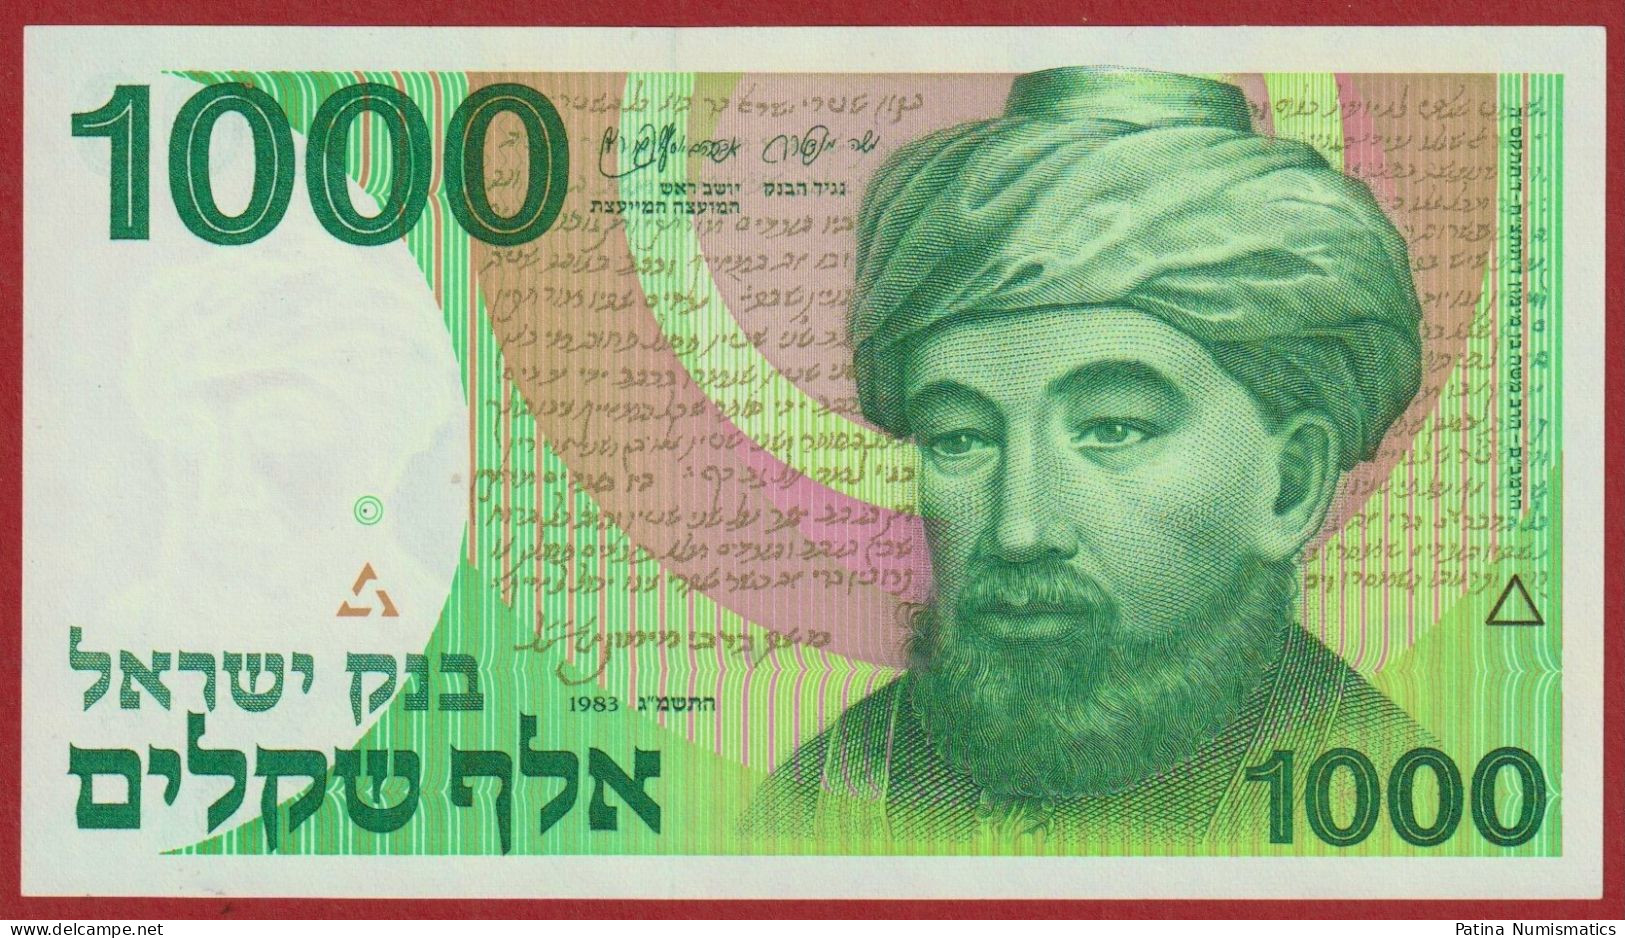 Israel 1000 Sheqalim 1983 P 49 Crisp Choice UNC - Israel